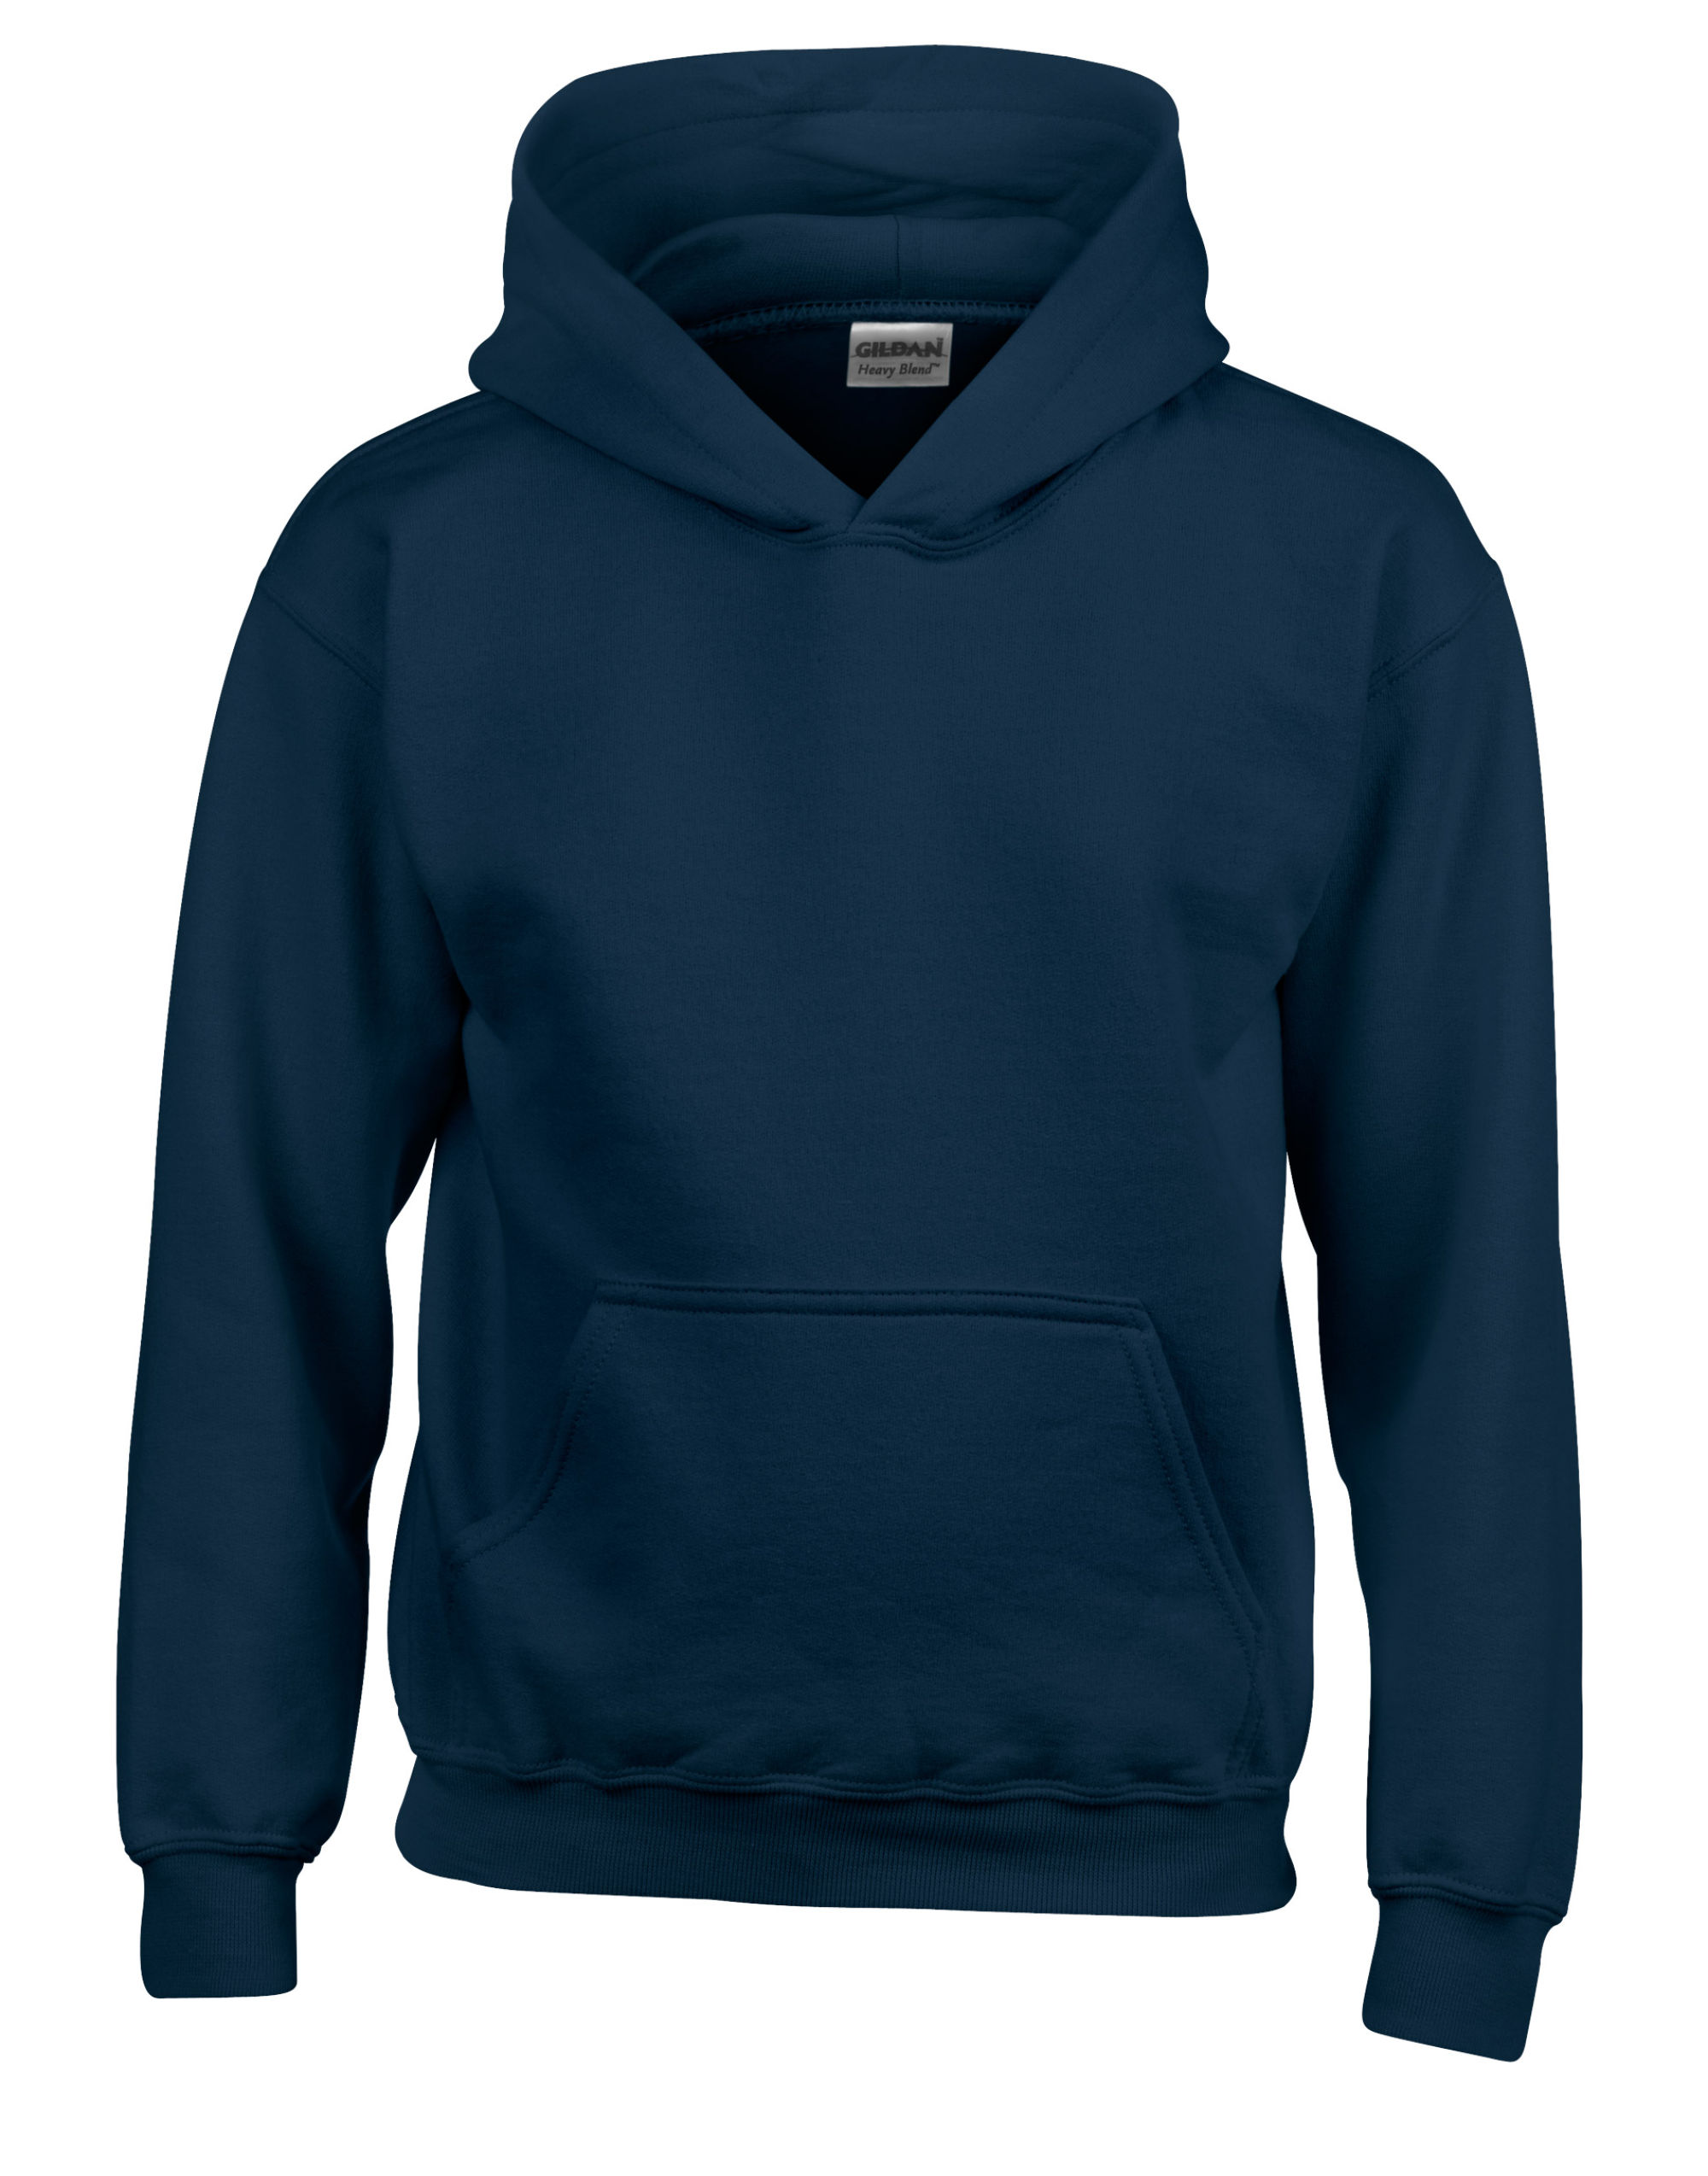 Gildan Childrens Hooded Sweatshirt 18500B | eBay